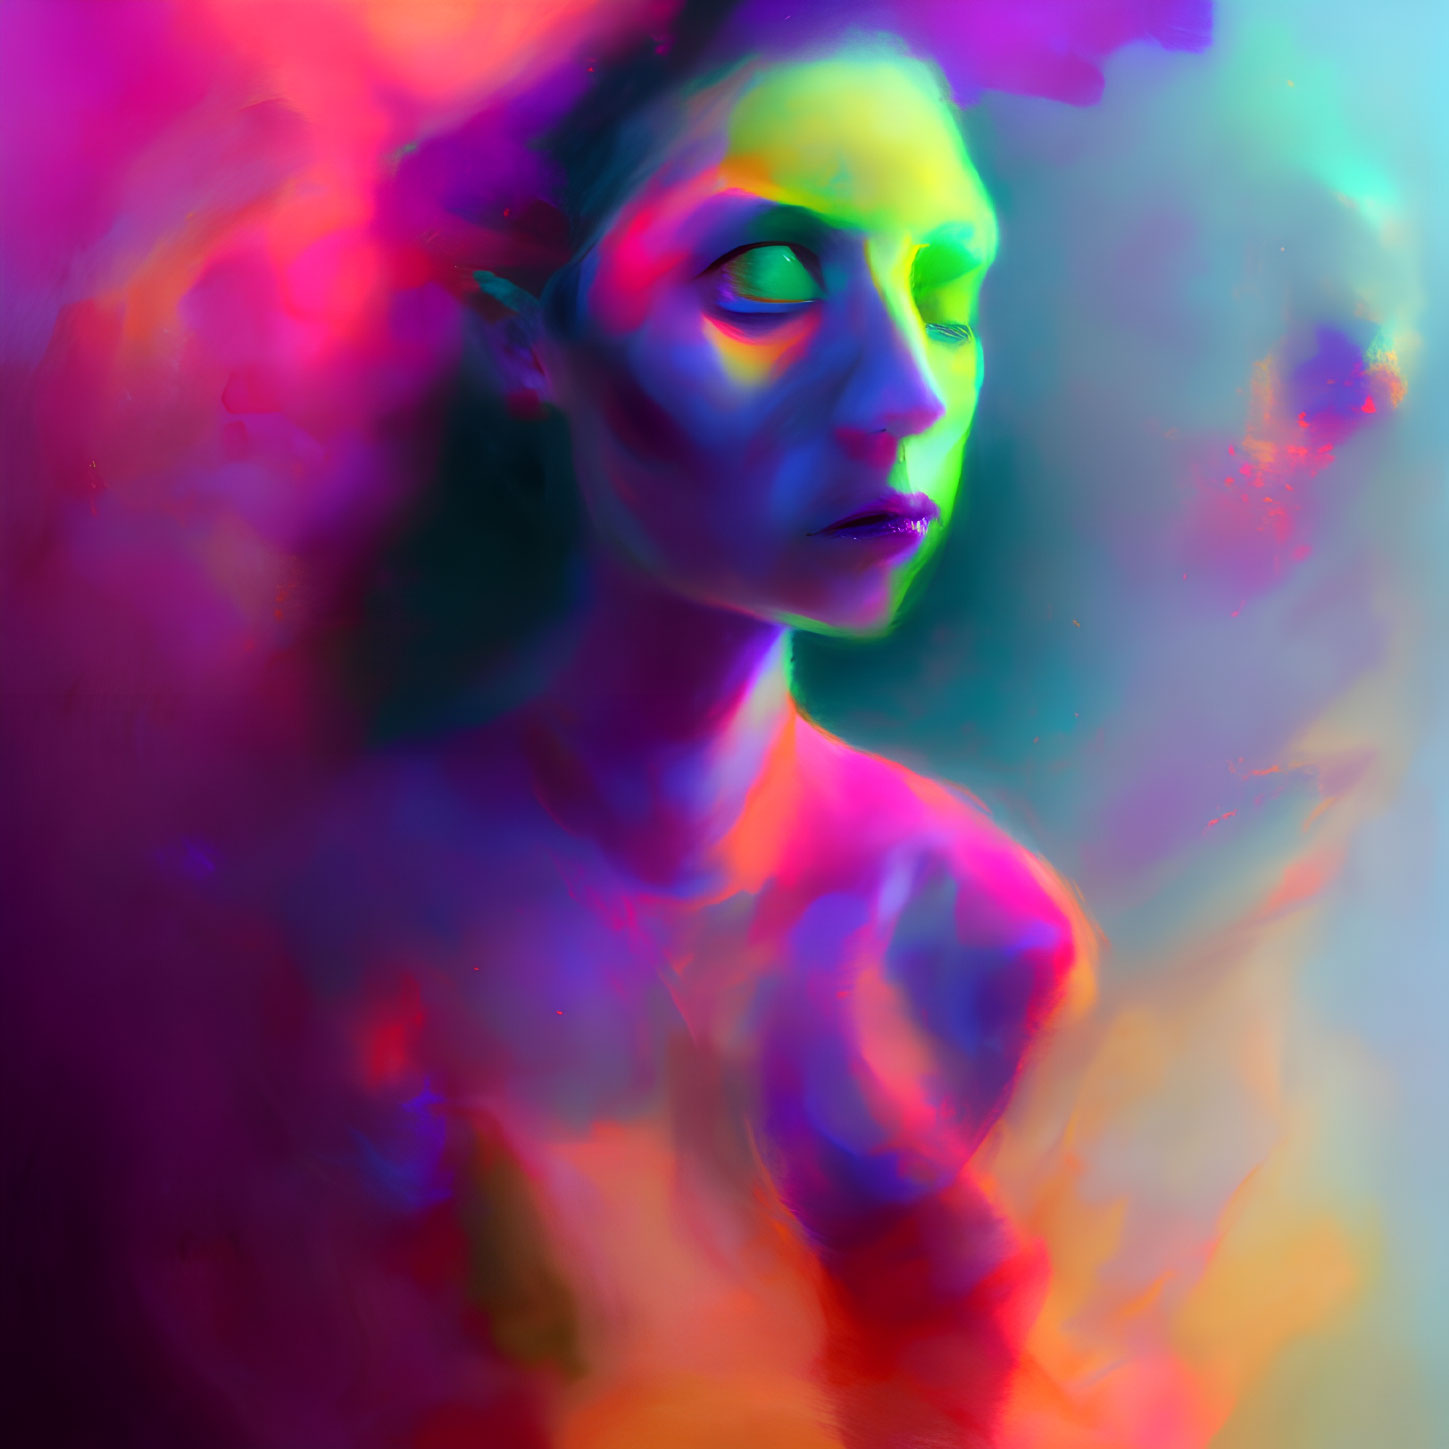 Colorful portrait of a contemplative person in neon hues